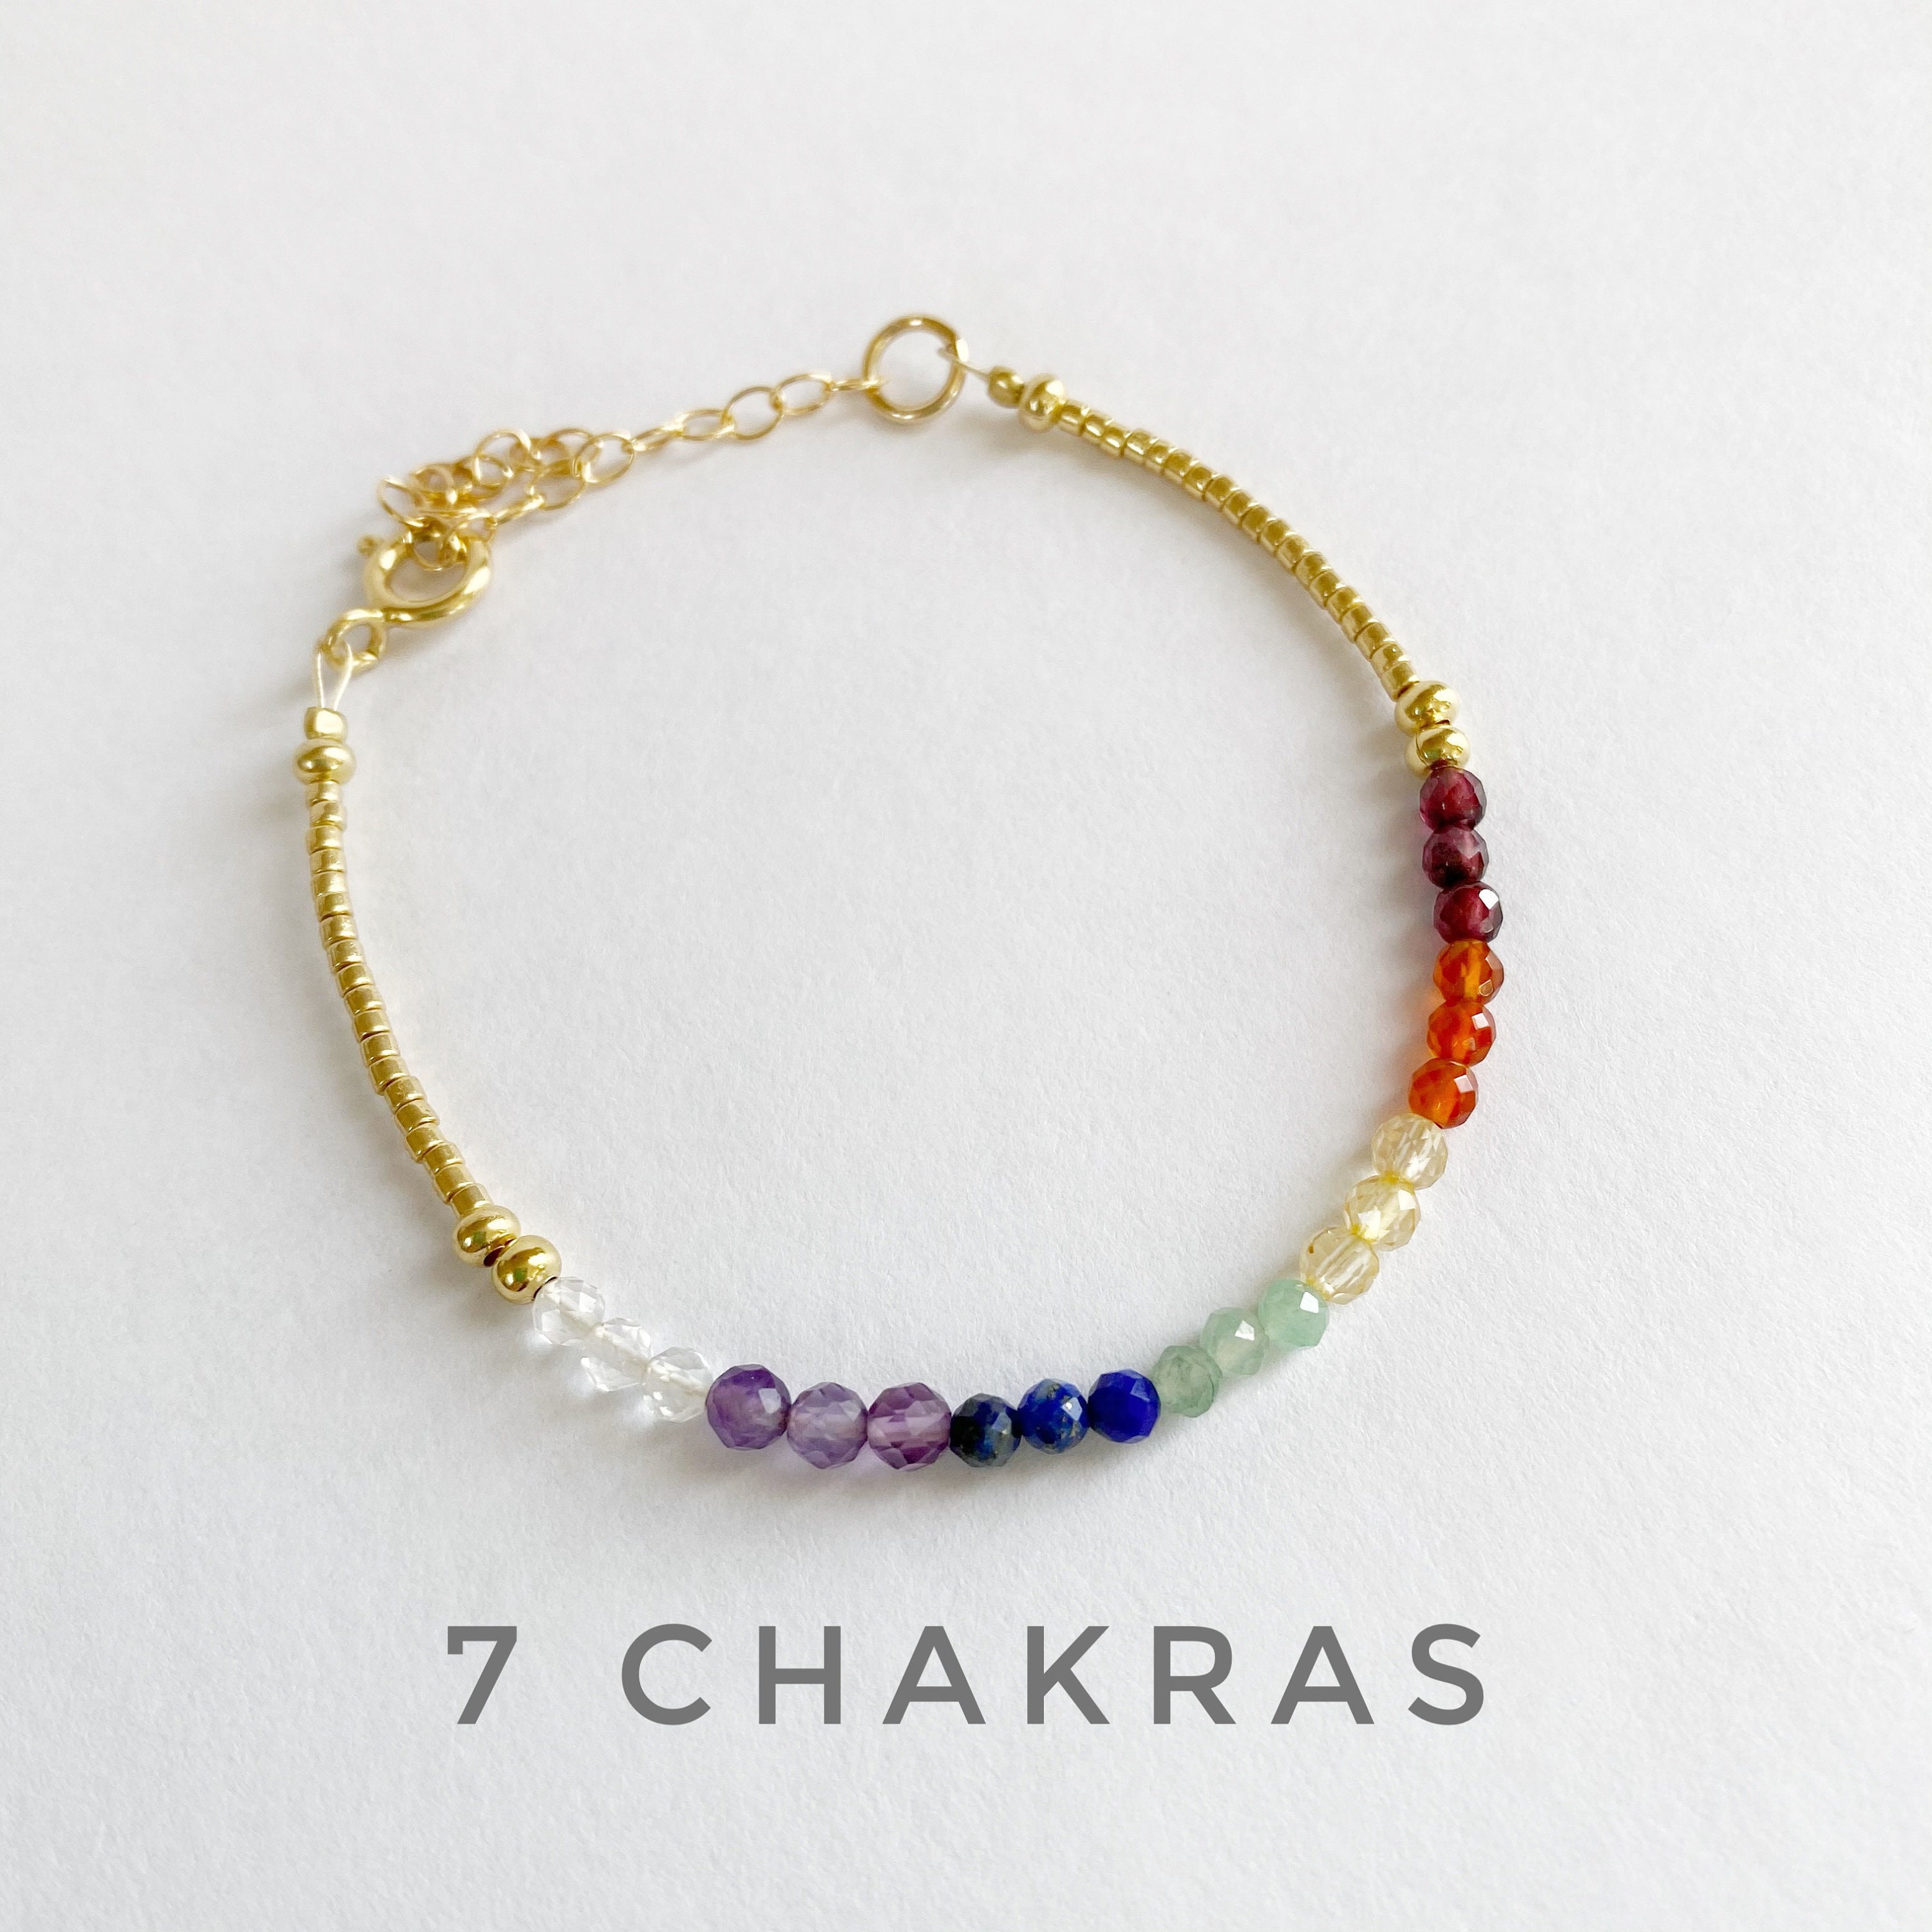 7 Chakra Bracelet Adjustable Cord gemstones Seven Chakras 4mm Beads-goldfilled  Sterling Silver Meditation yoga Healing handmade. 